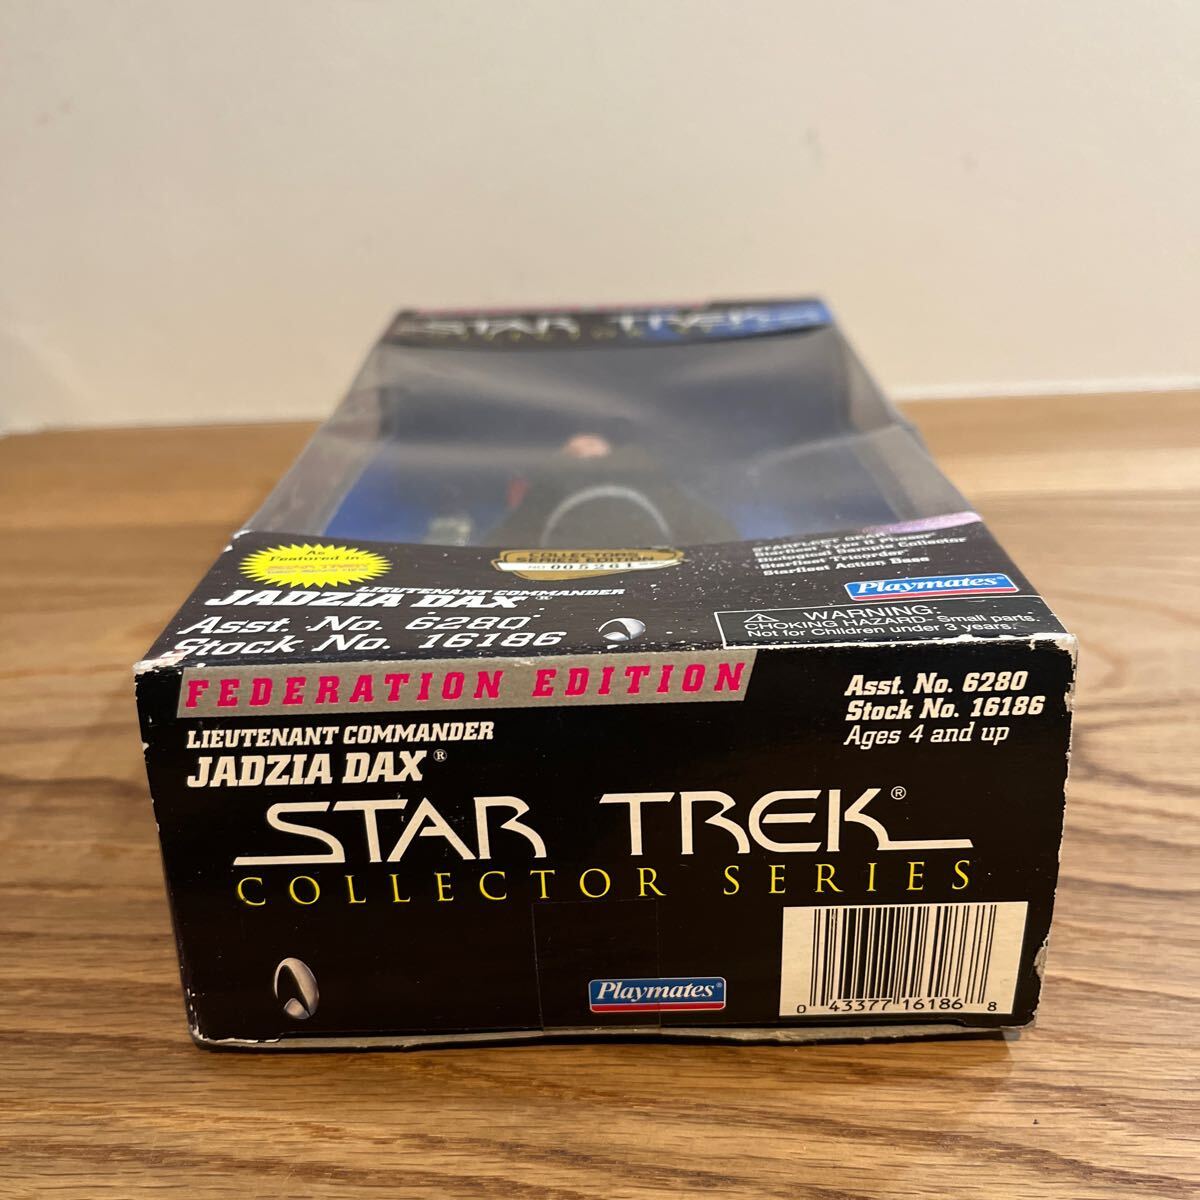 STARTREK/ COLLECTOR SERIES[JADZIA DAX] фигурка Star Trek Playmates 1997 год 